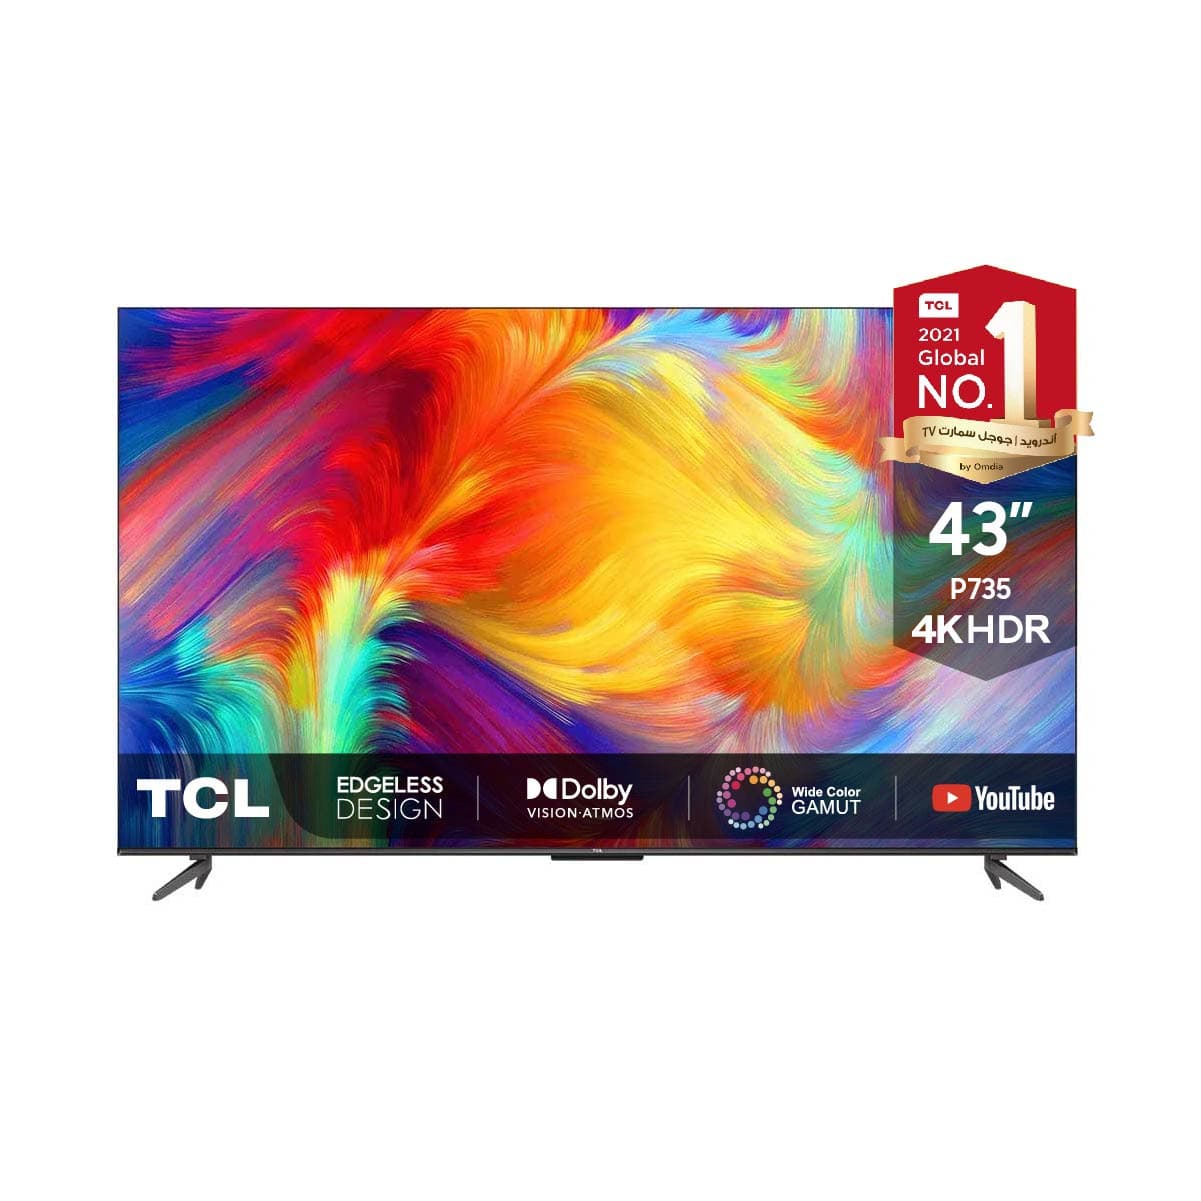 TCL QLED 43C645 4K Ultra HD Google TV, Television